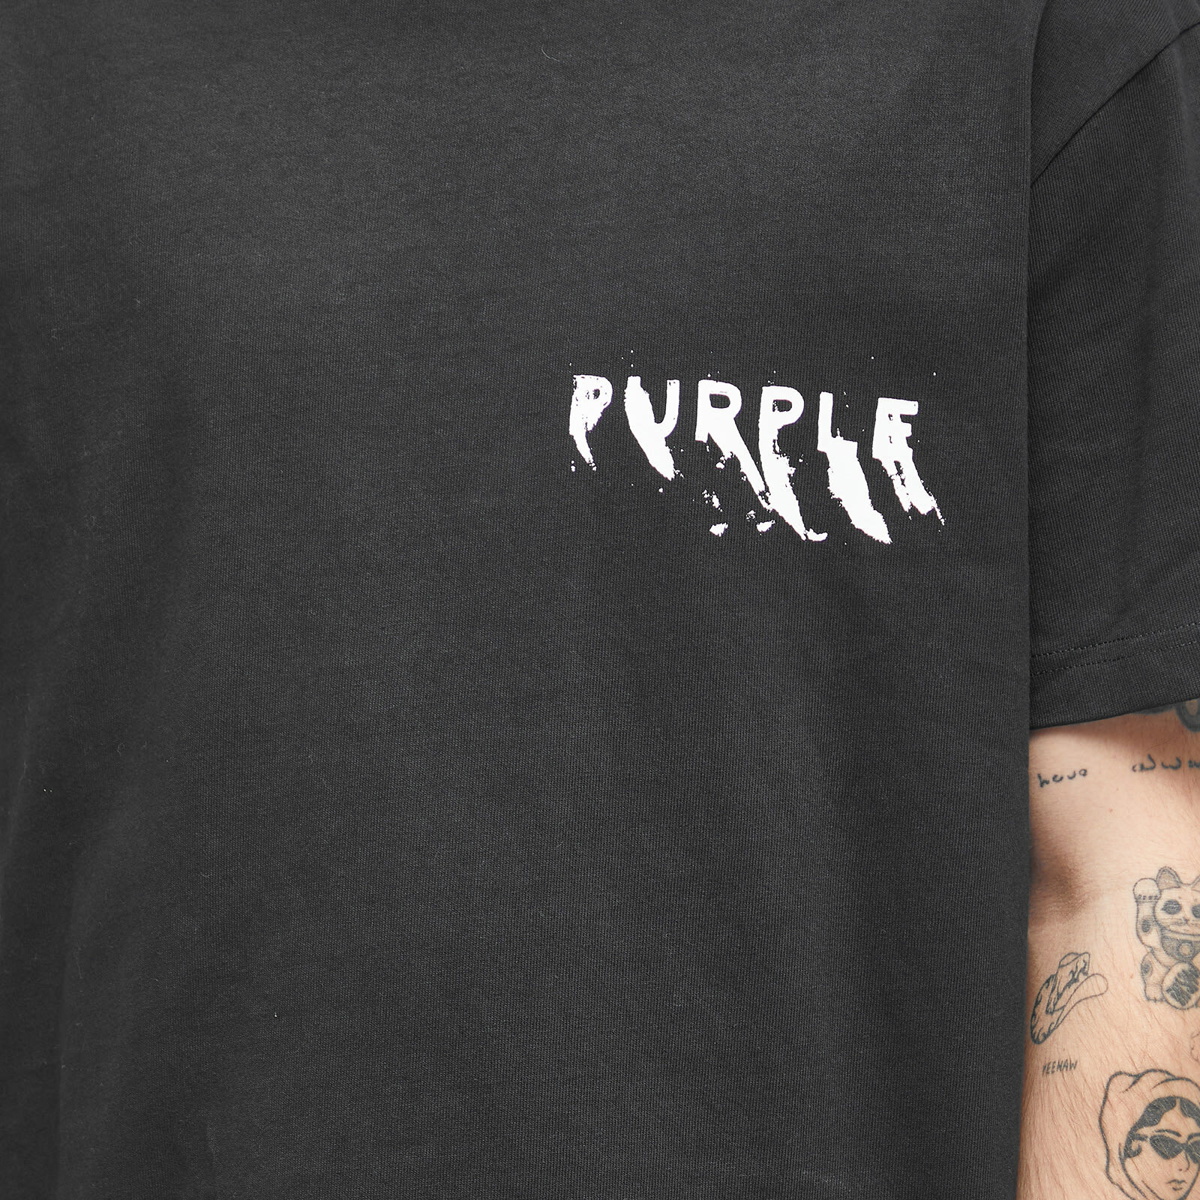 Purple Brand Heavy Jersey Distressed T-Shirt Black